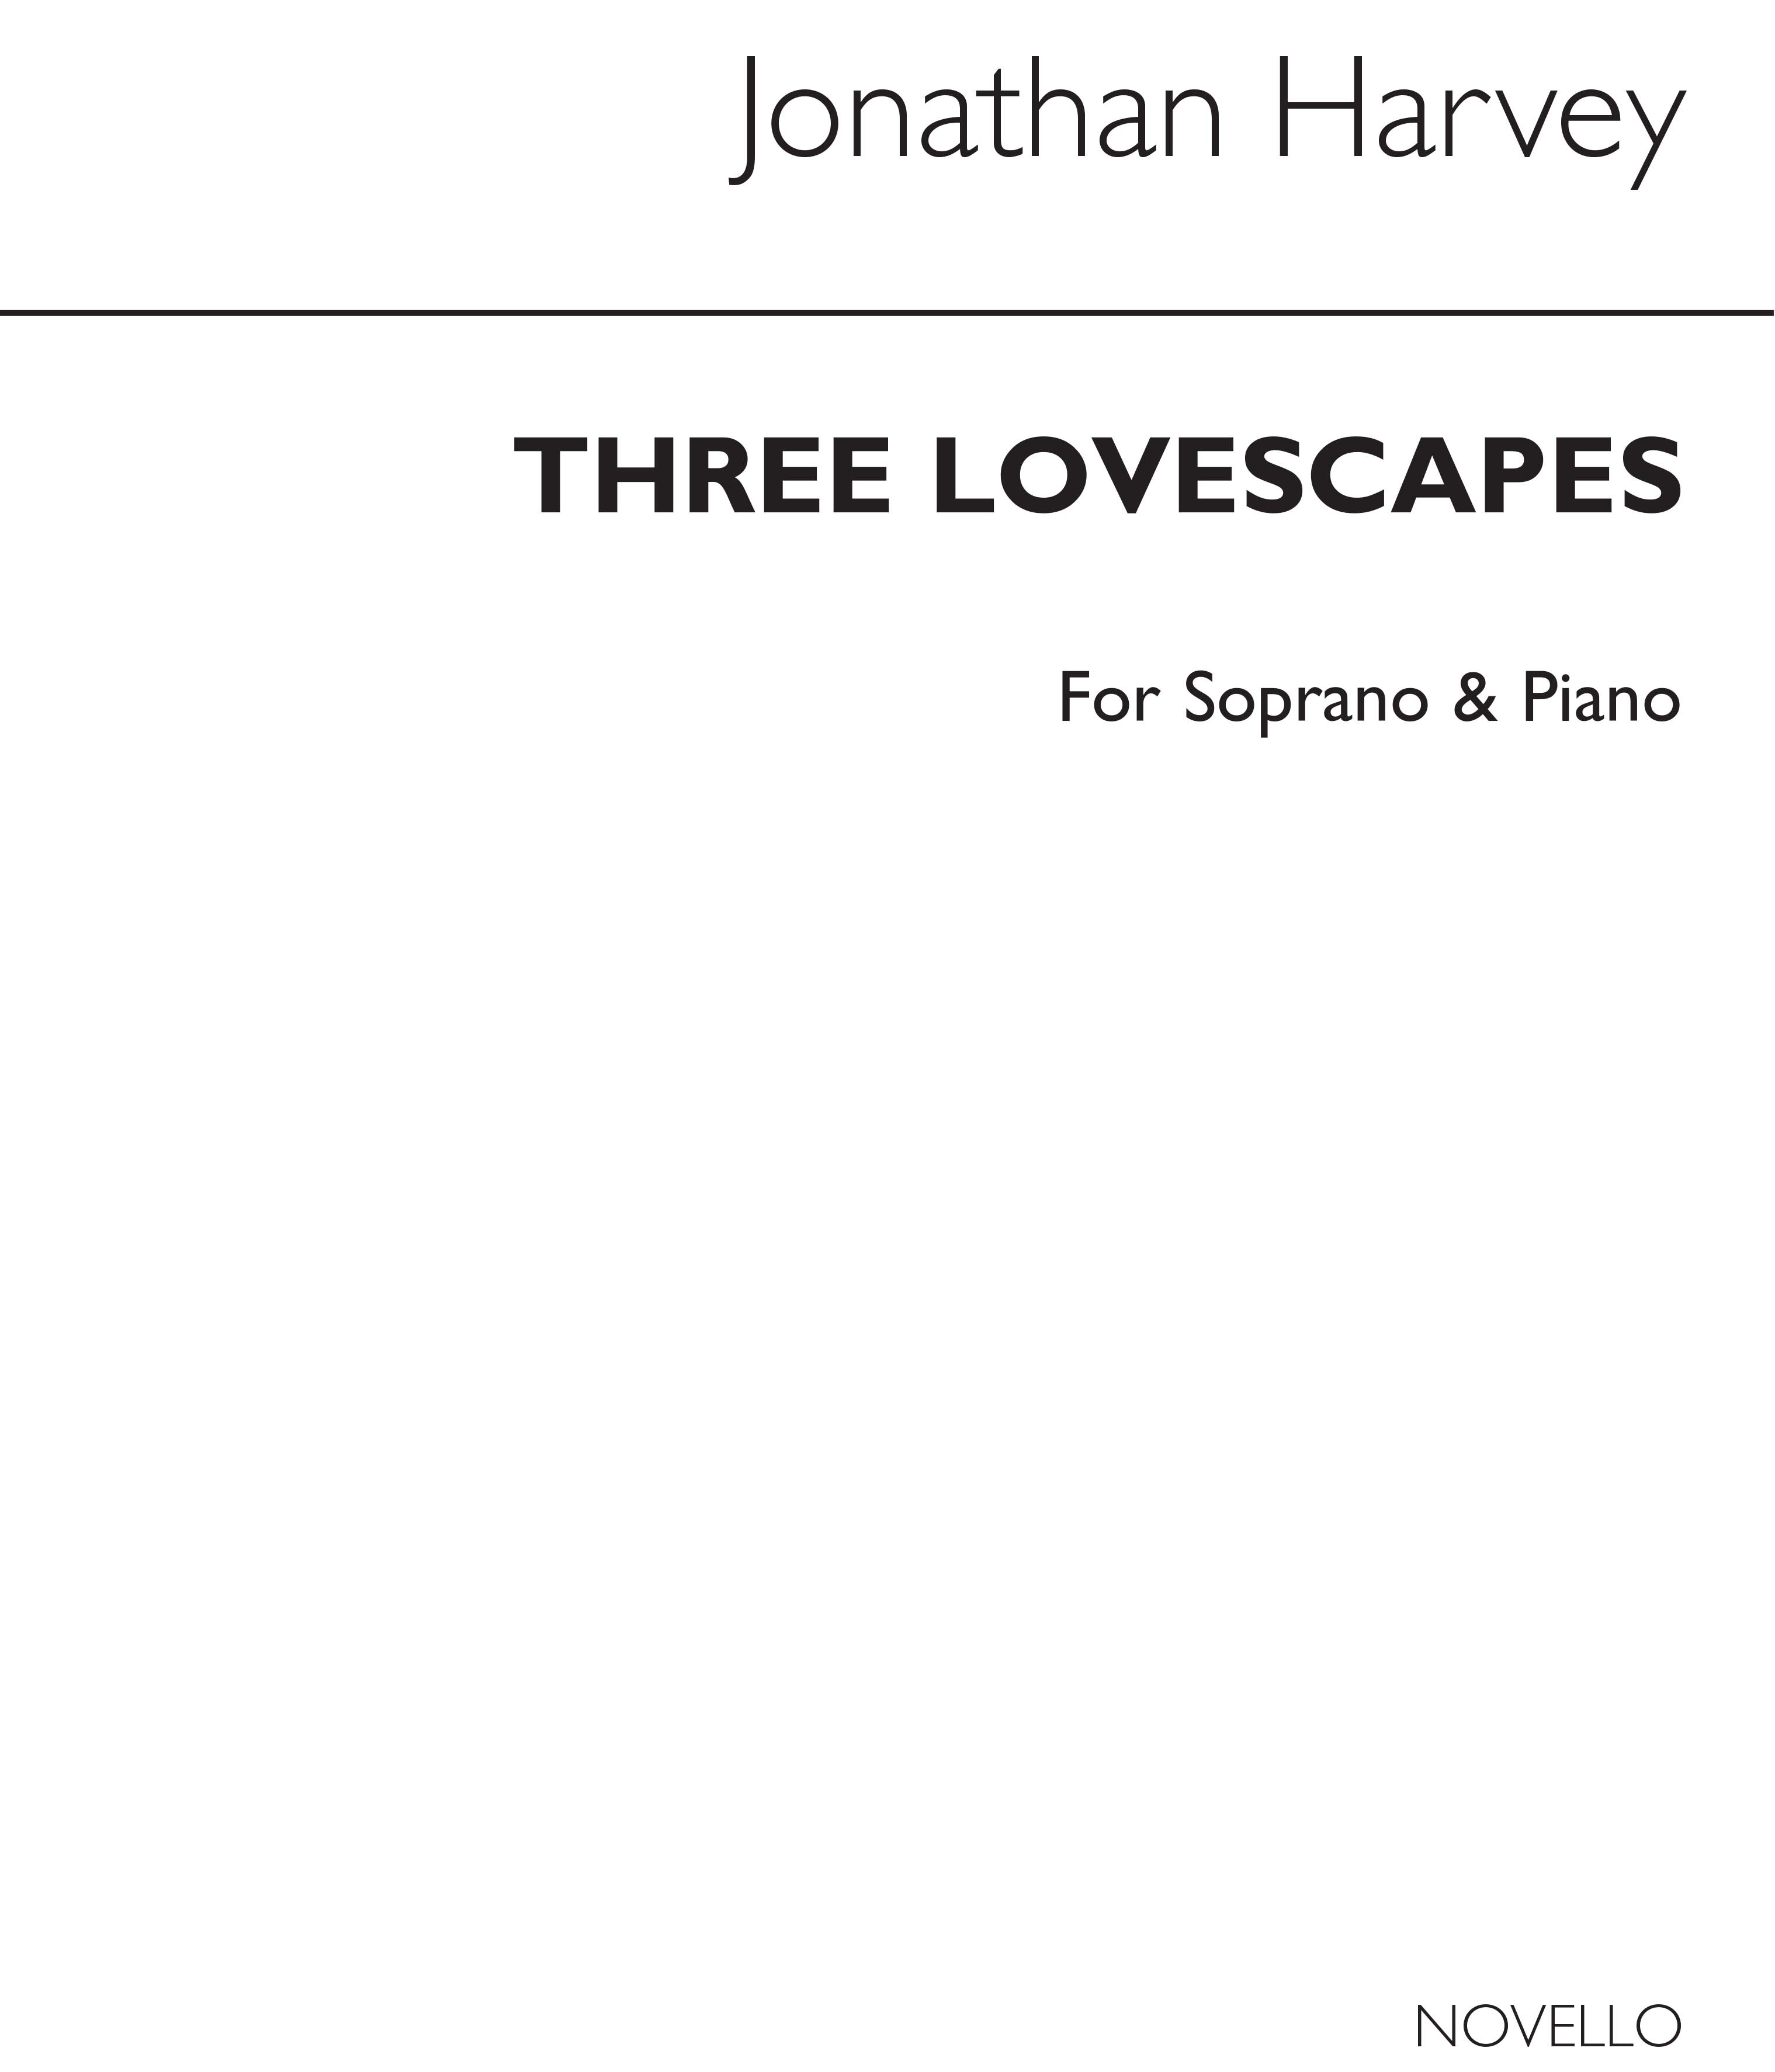 Jonathan Harvey: Cantata II - Three Lovescapes for Soprano Voice with Piano